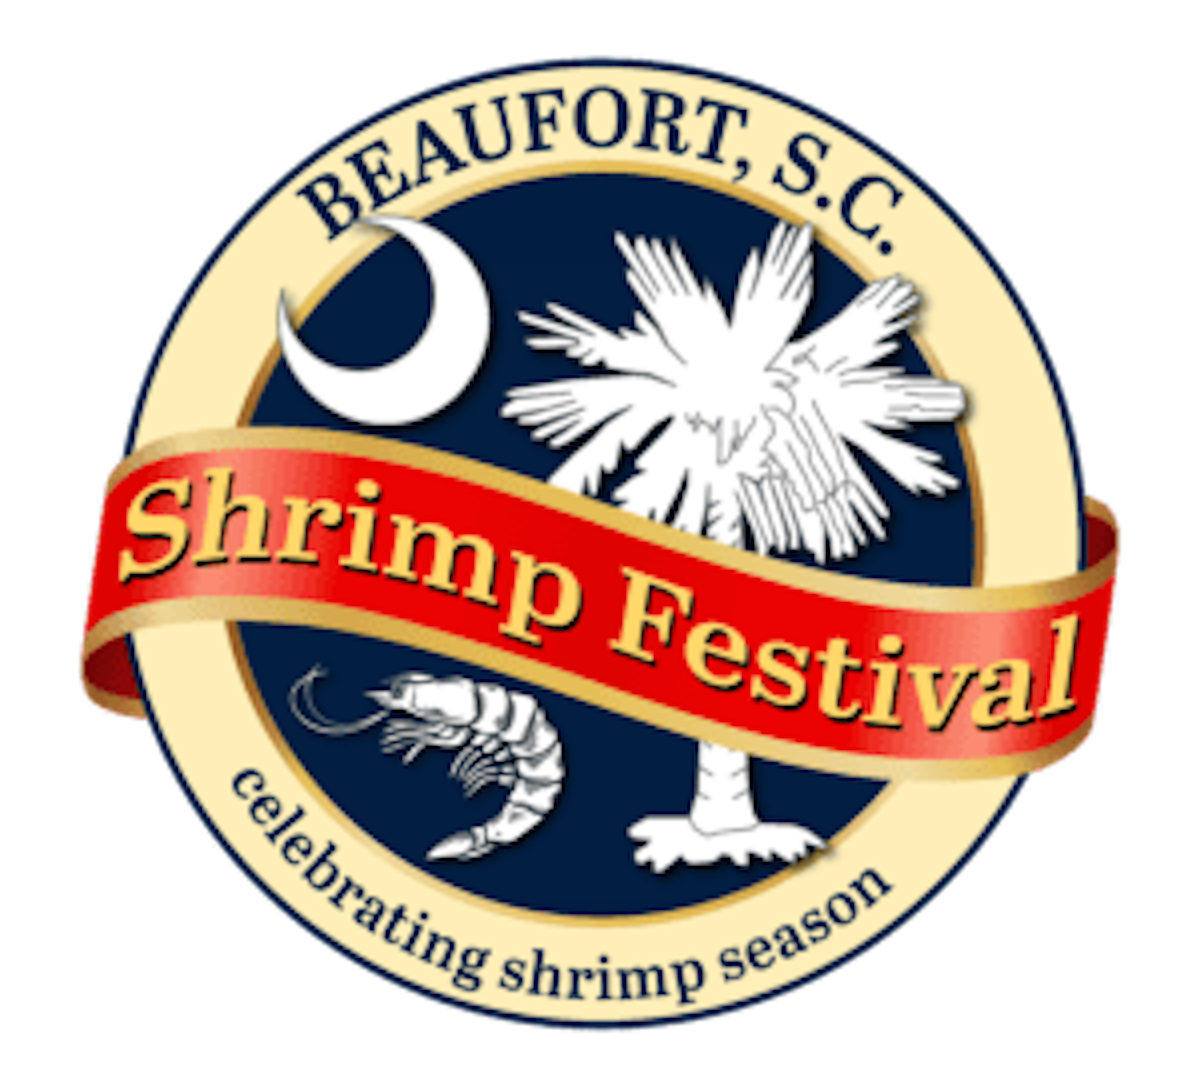 29th Annual Beaufort Shrimp Festival returns this weekend